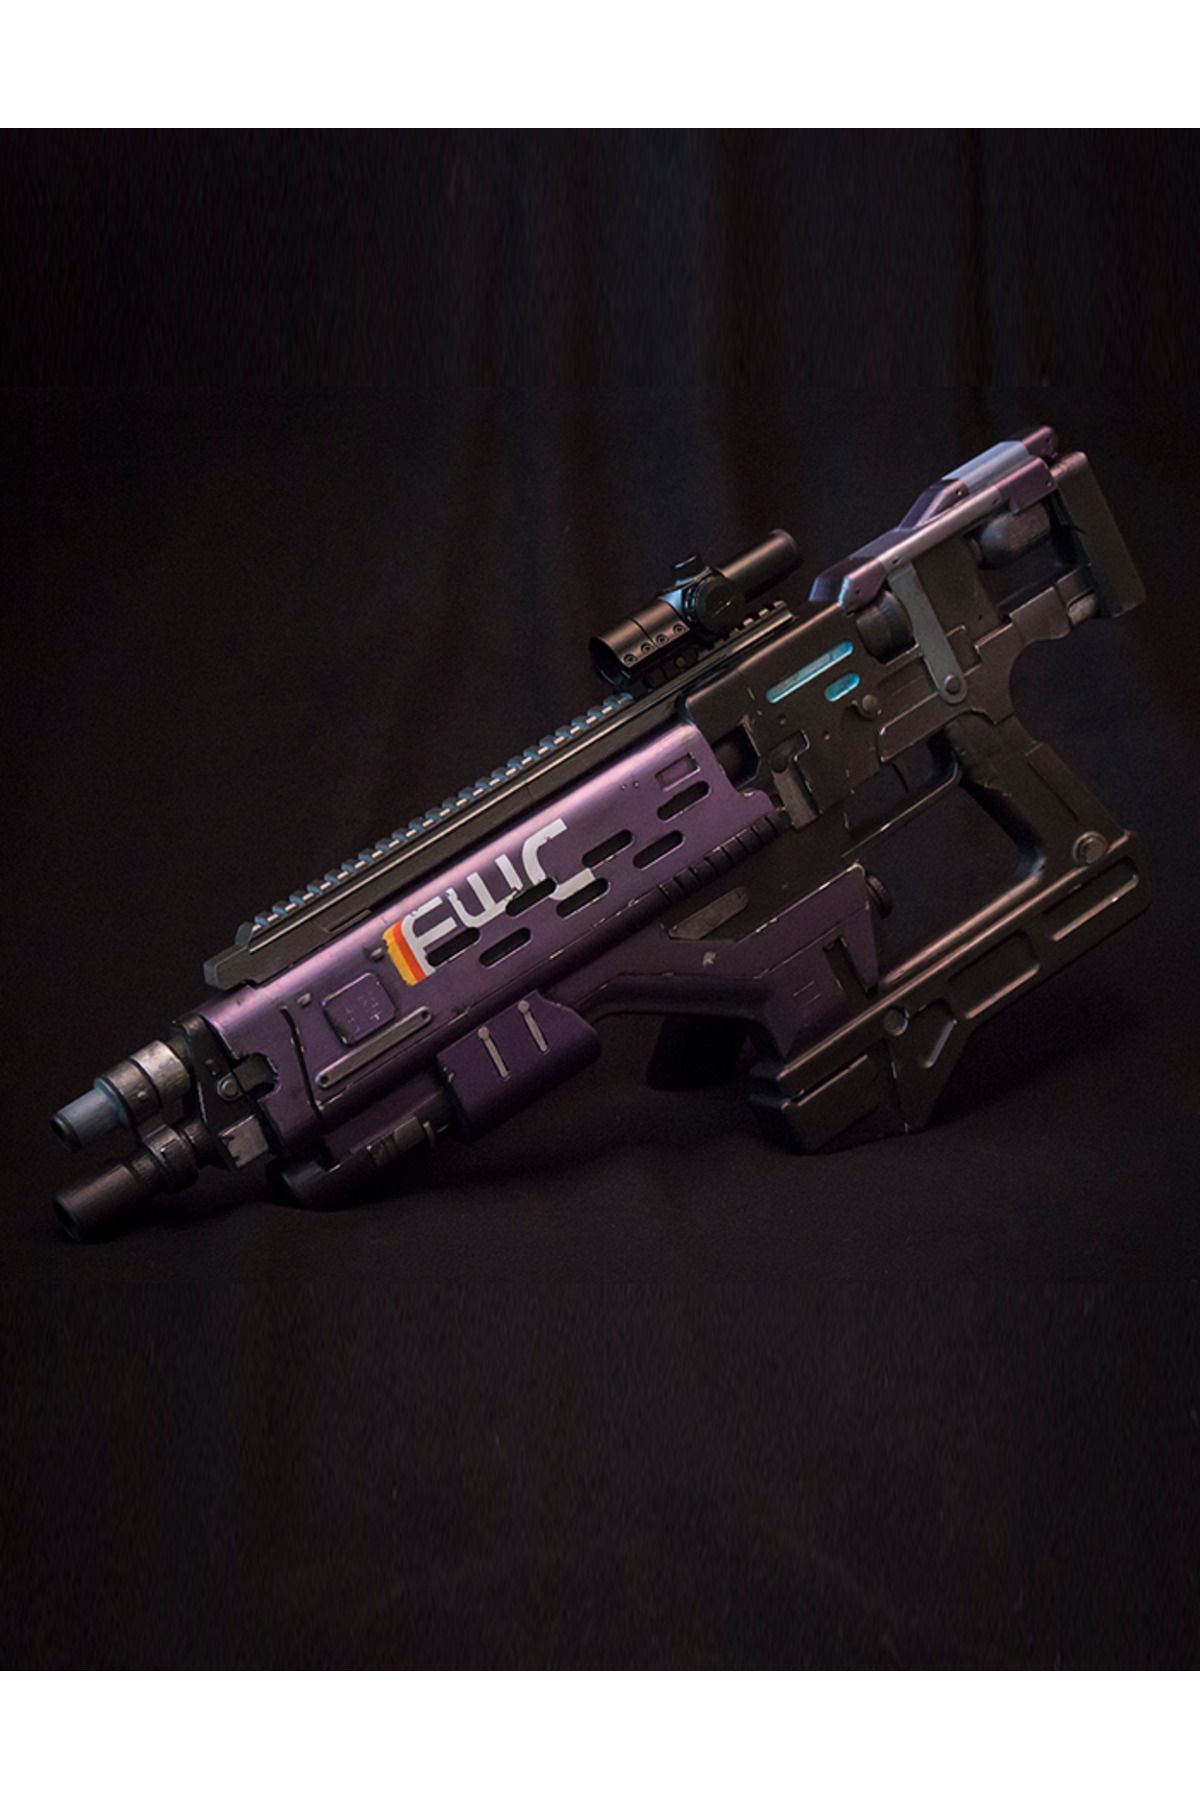 gimto3d Destiny 2 Conduit F3 Oyuncak Silah Büyük Boy